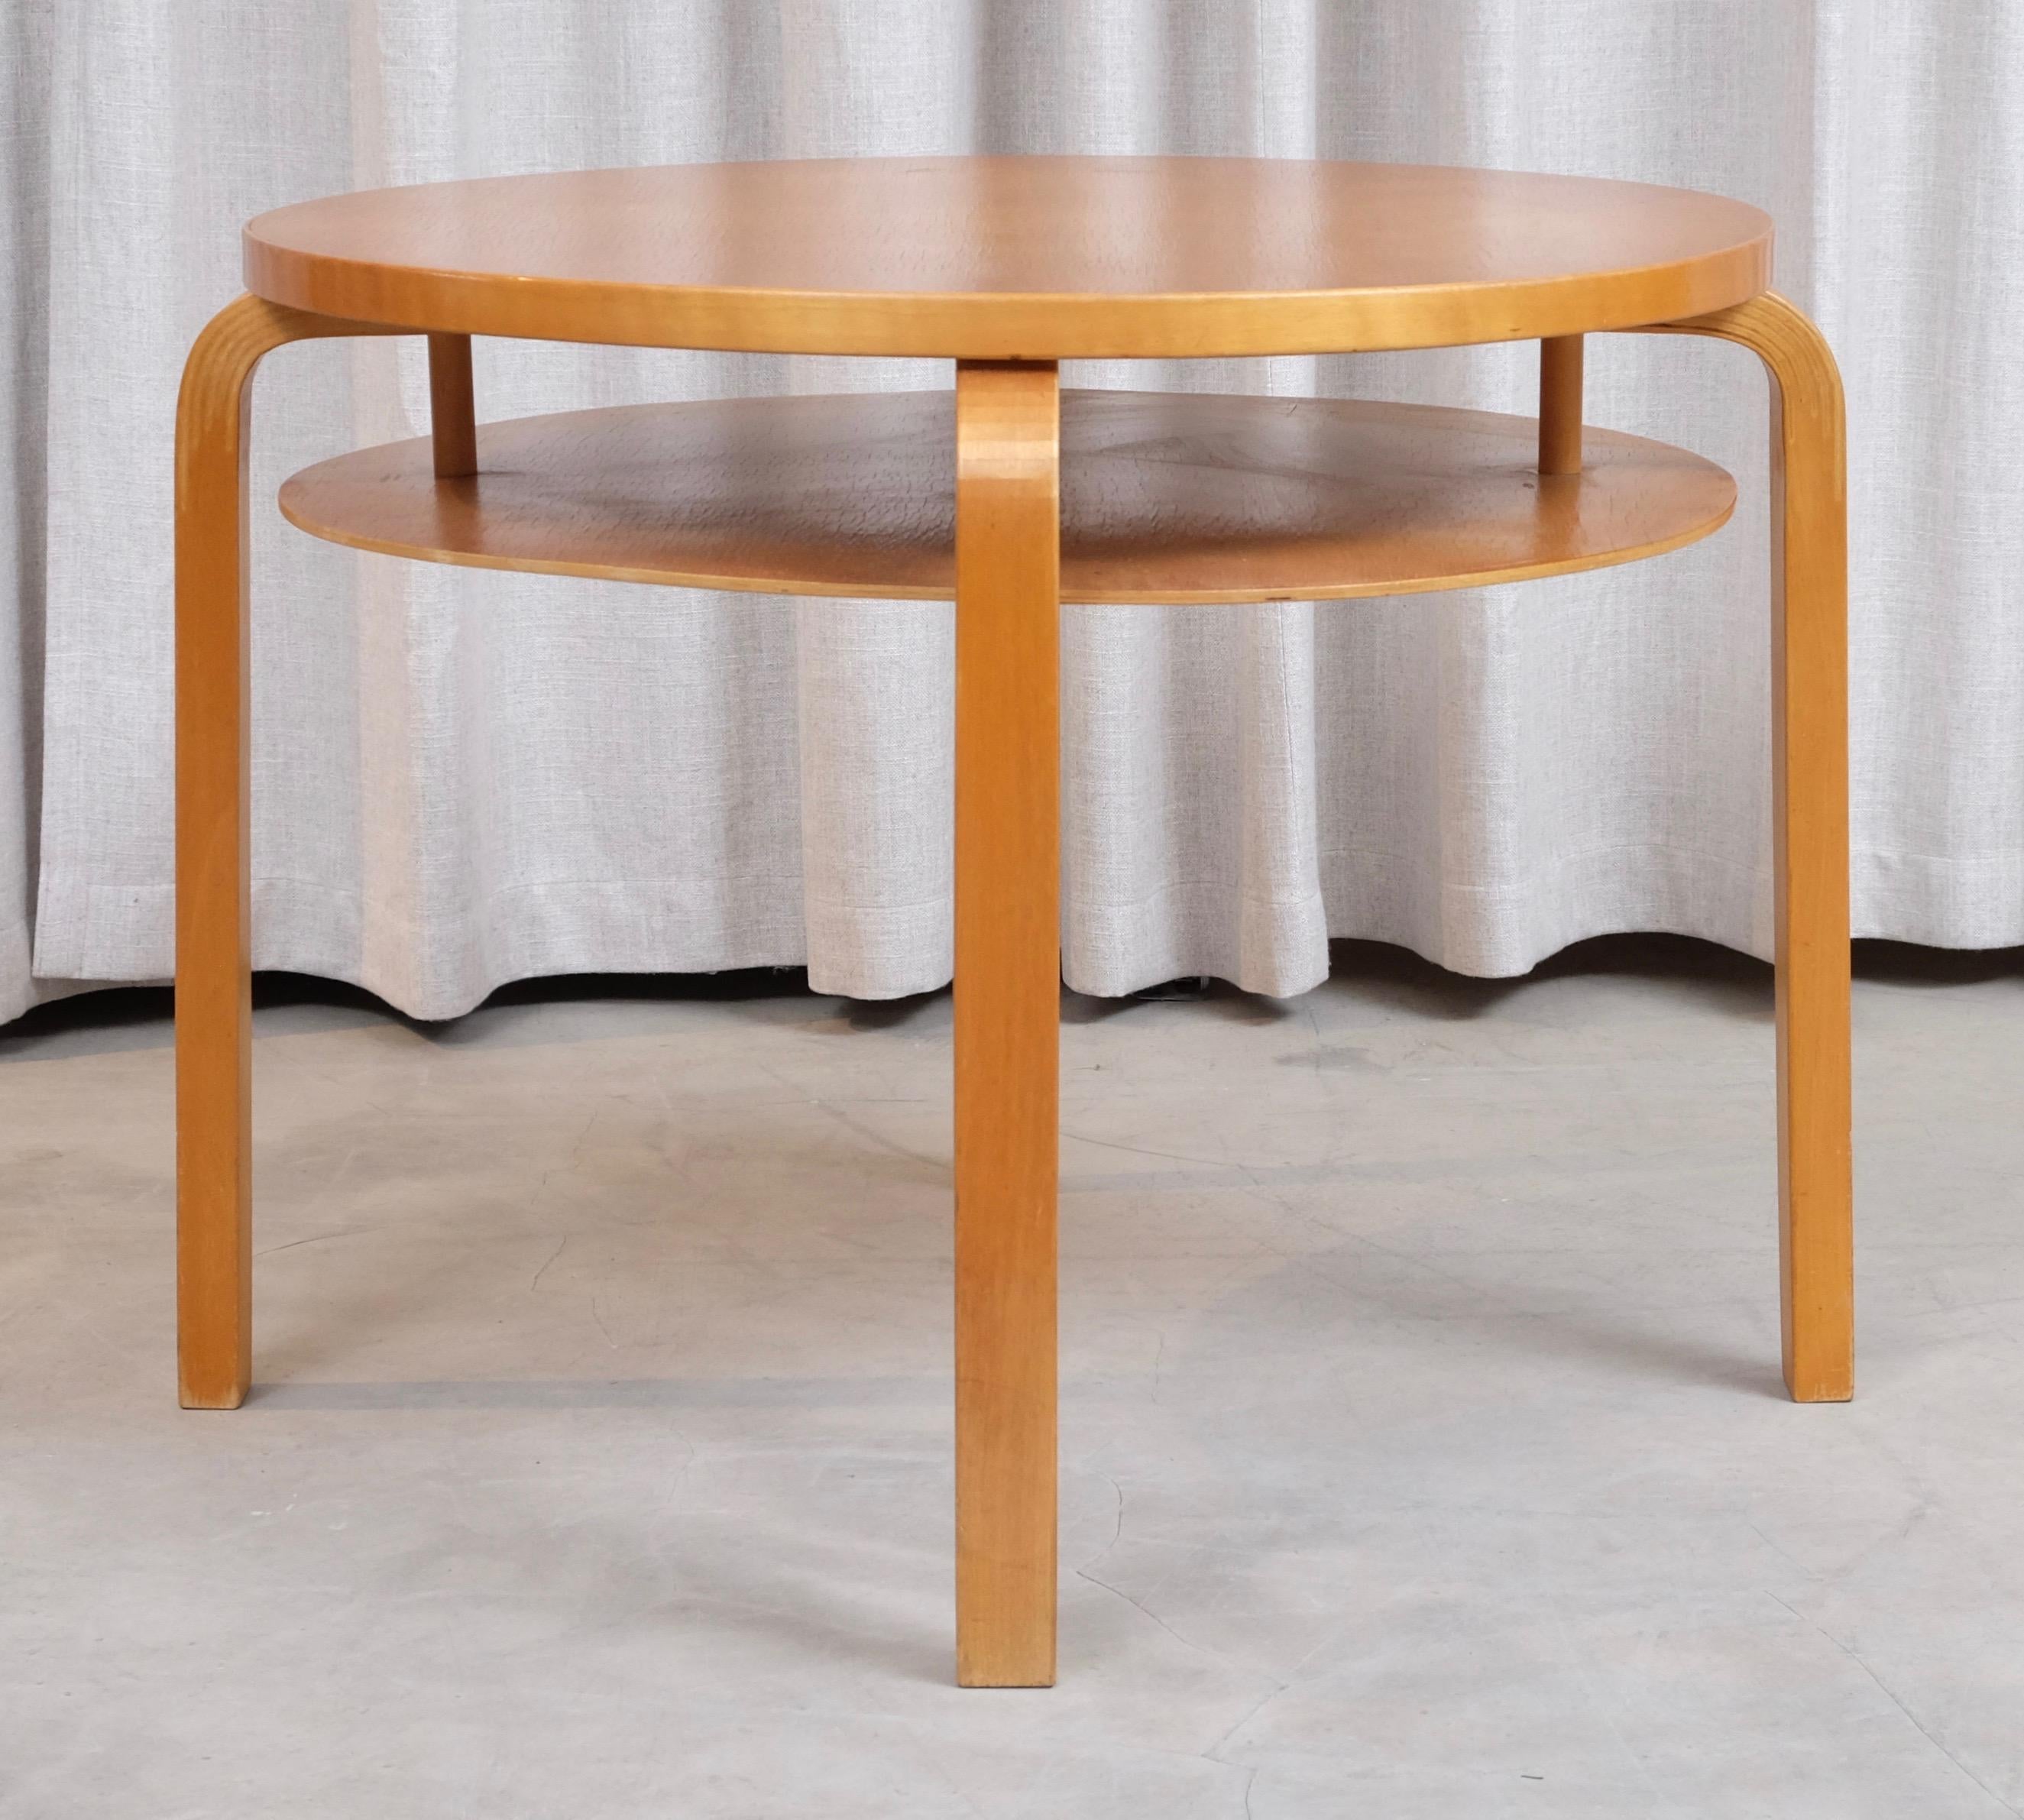 Scandinavian Modern Rare Alvar Aalto Table 907 Produced by Artek, 1940s